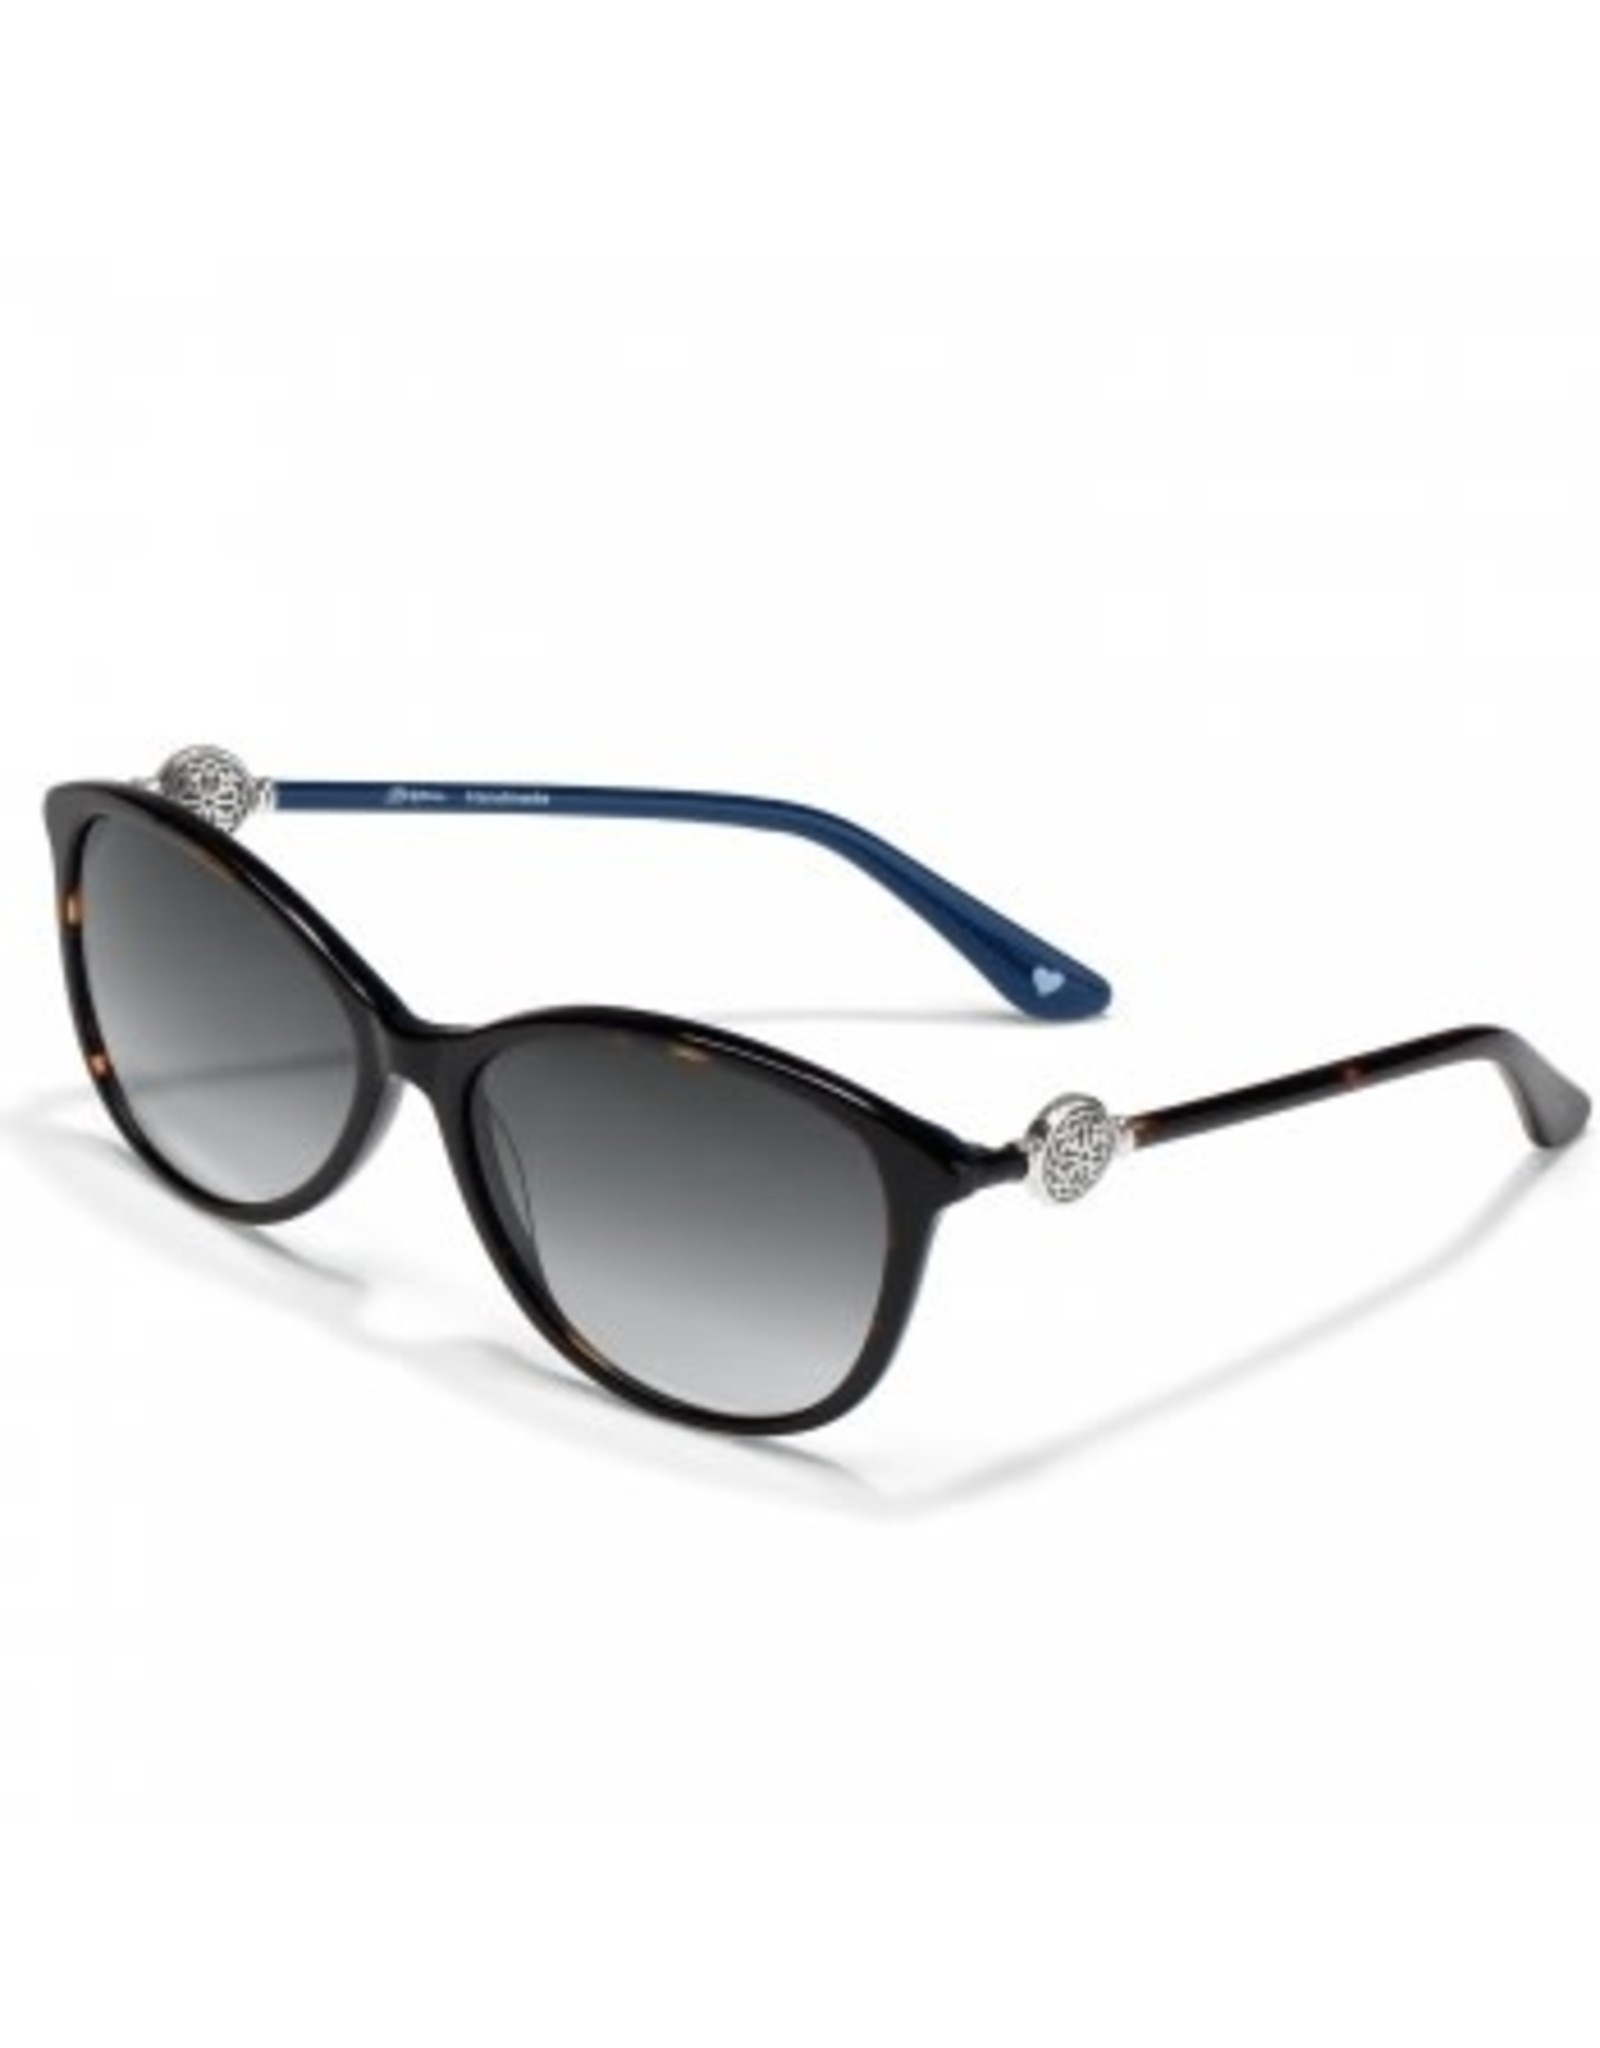 Brighton Ferrara Navy Tortoise Sunglasses